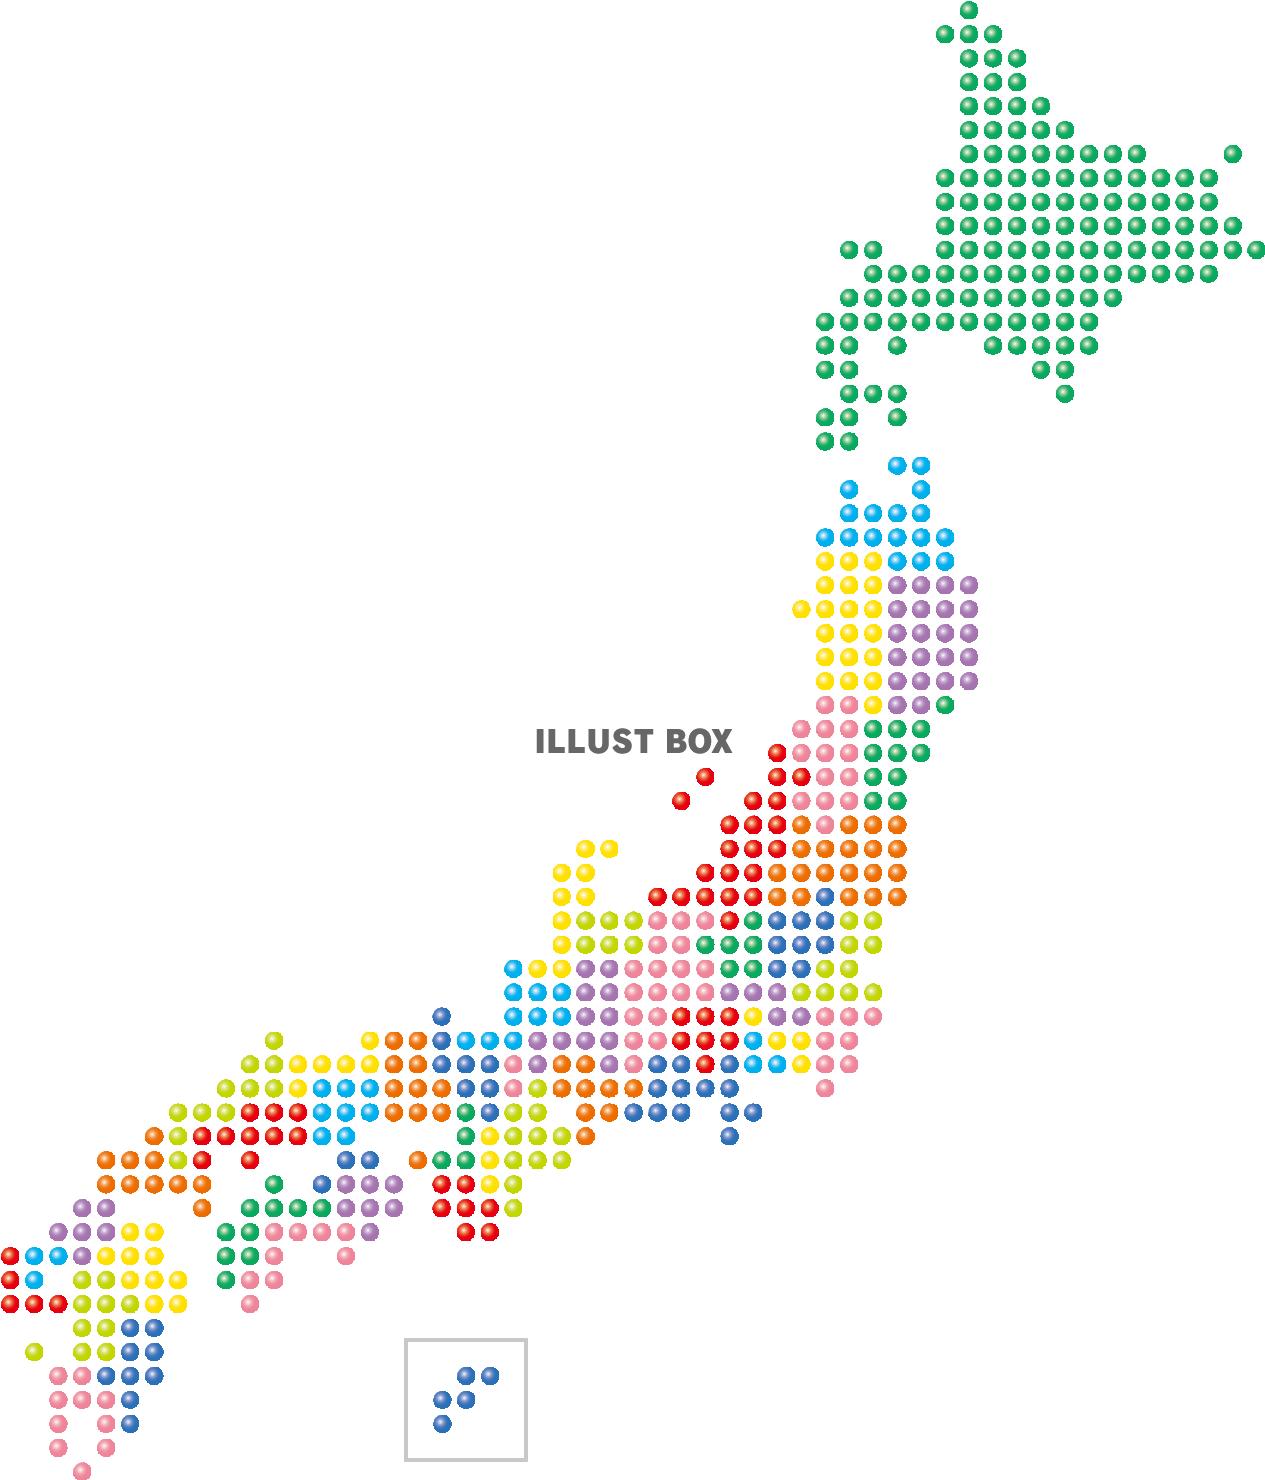 Japan Image 日本地図 フリー イラスト